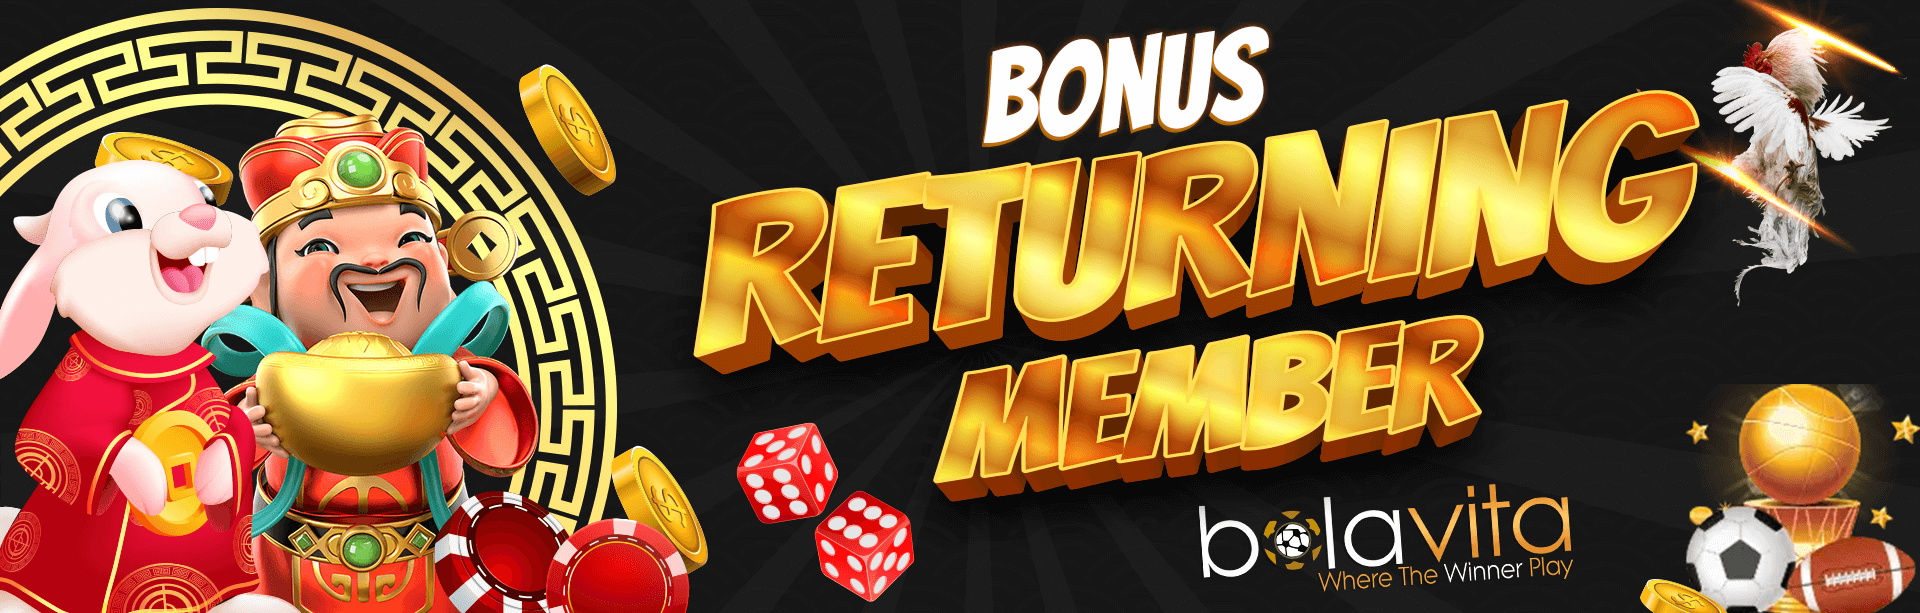 Bonus Returning Member 200.000